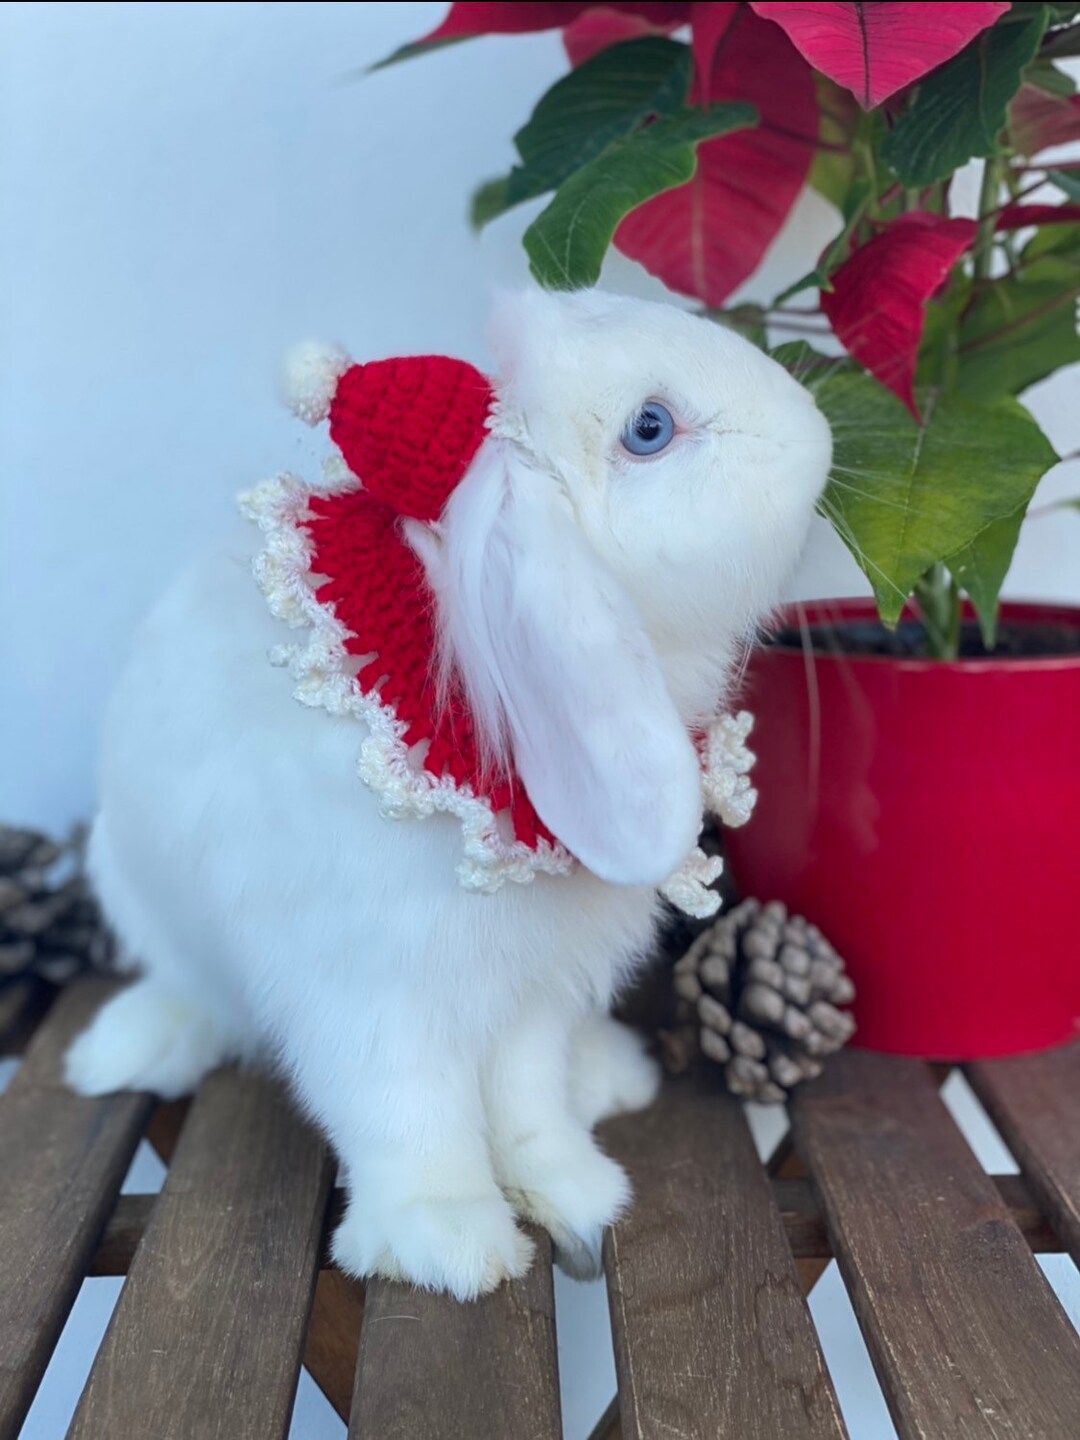 DolliBu dollibu santa grey rabbit stuffed animal plush toy - super soft  wild animal dress up with red santa claus outfit, cute farm l